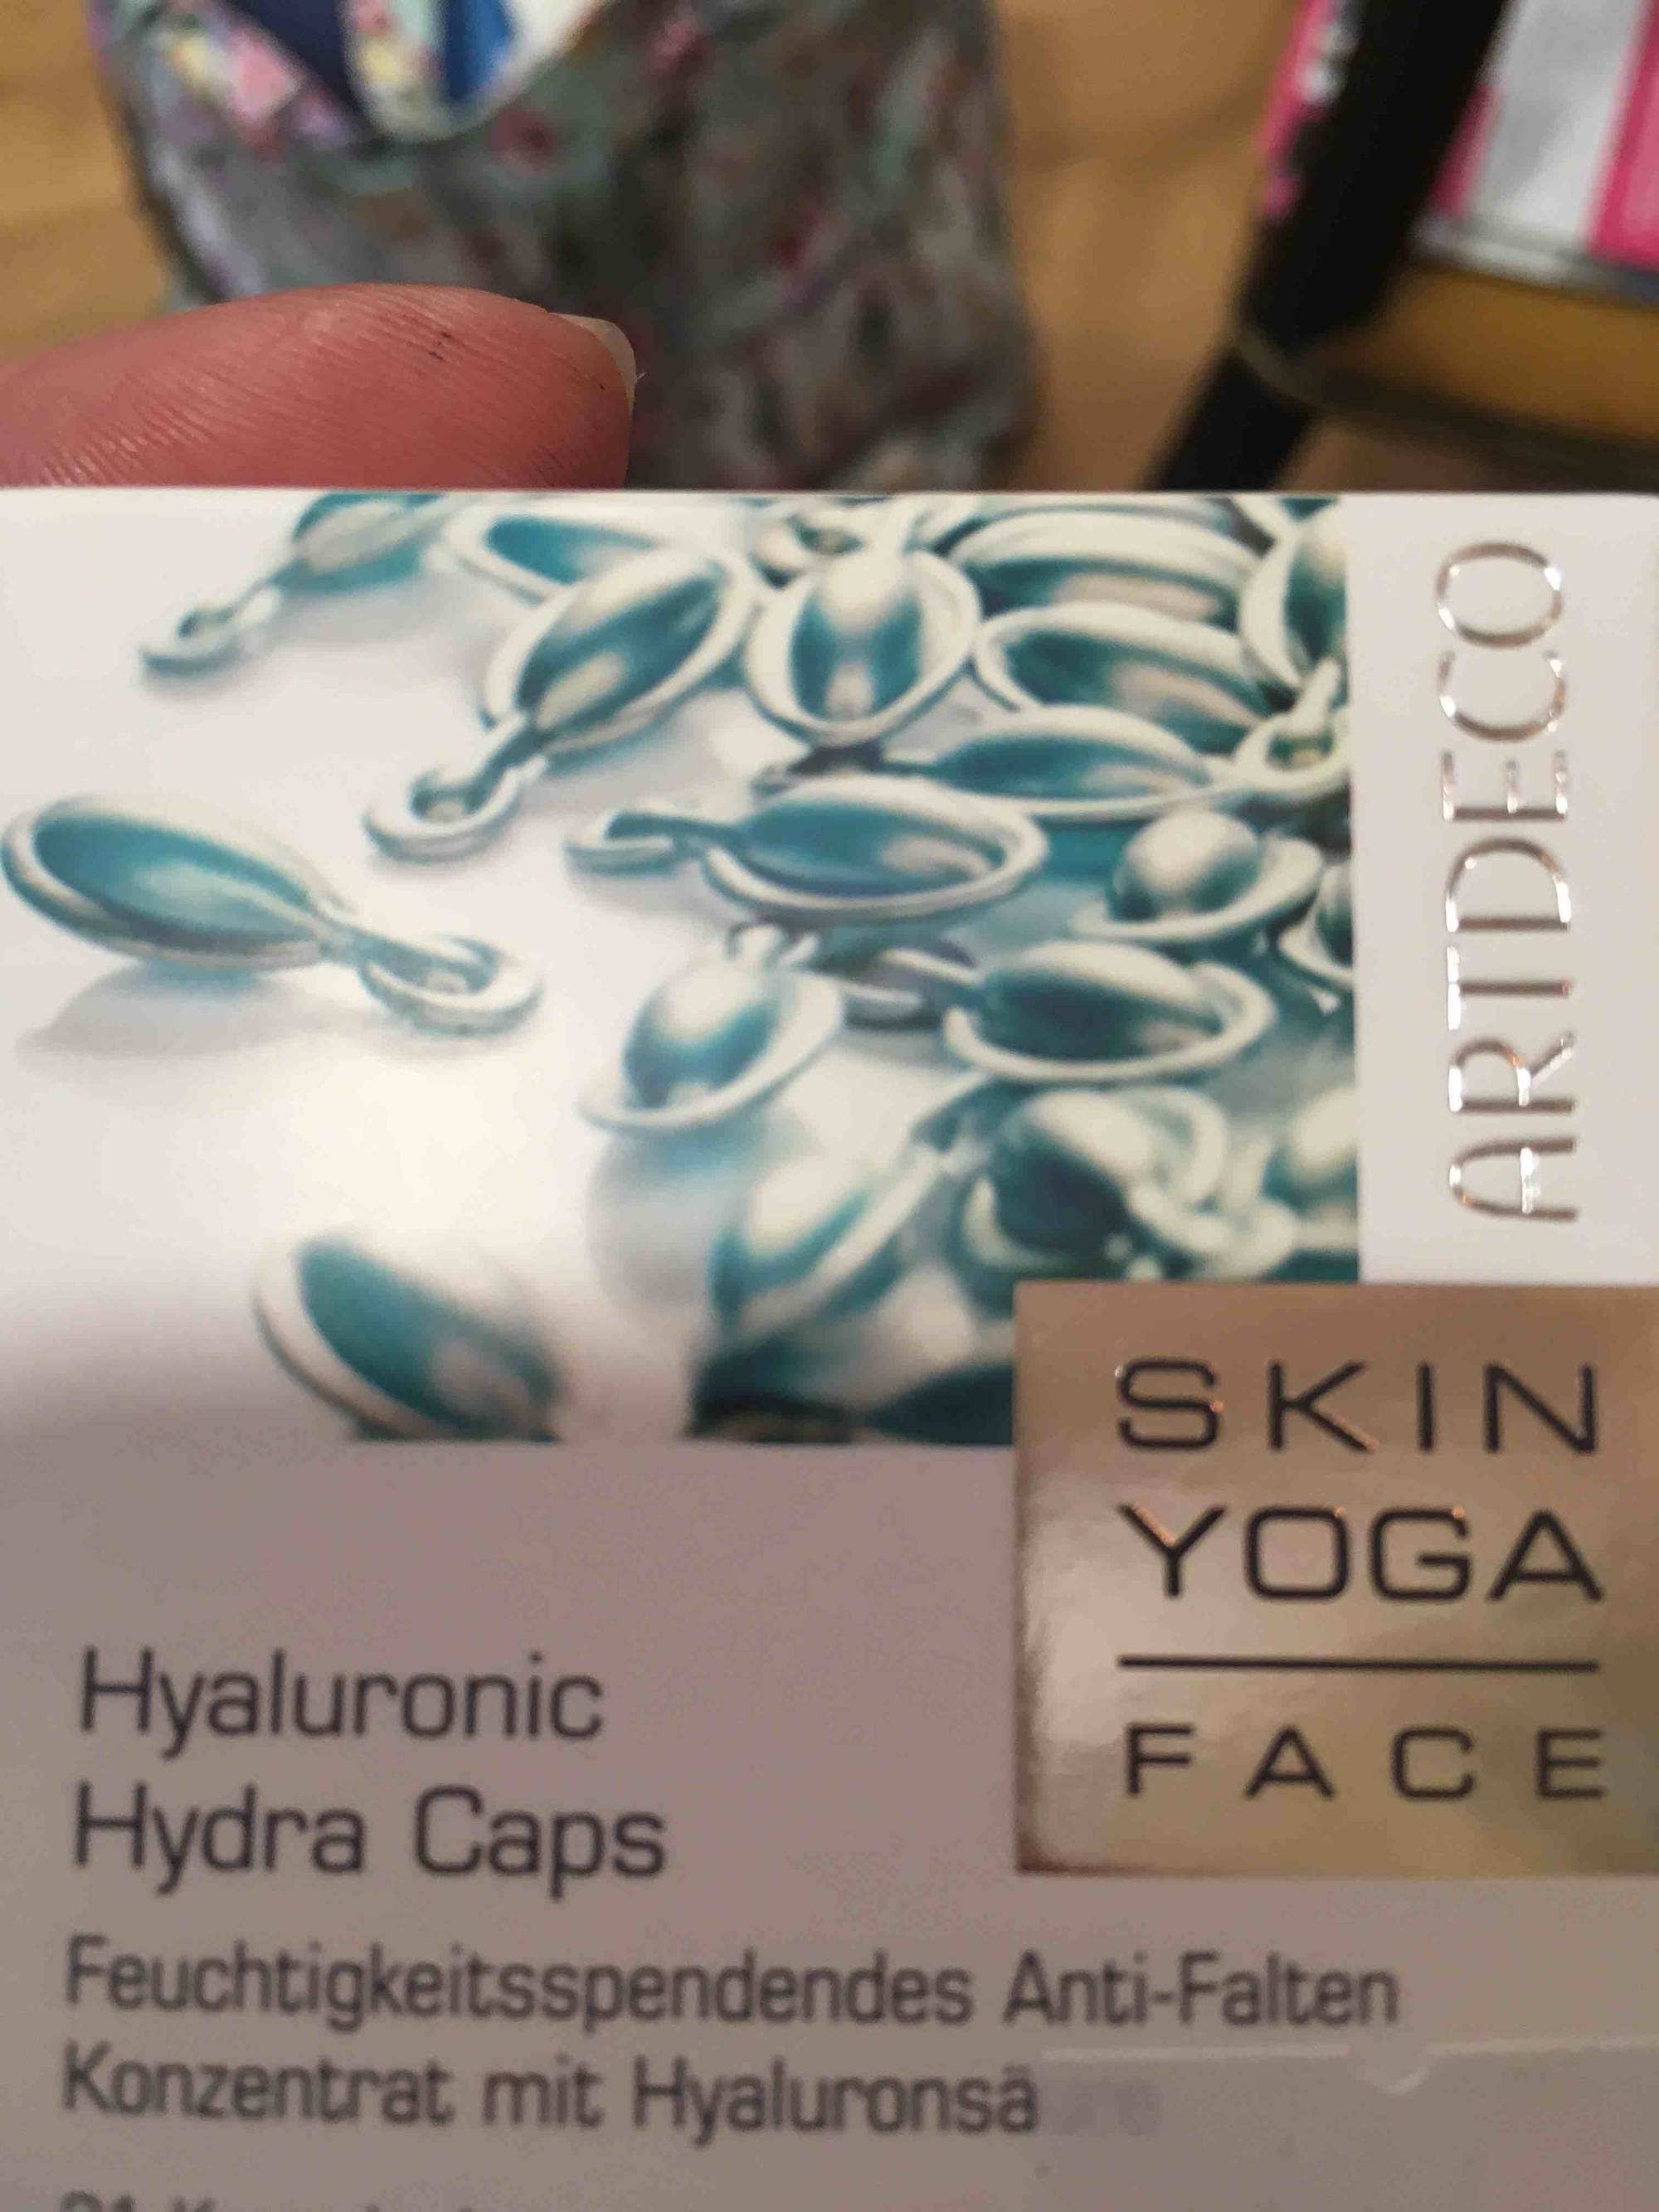 ARTDECO - Skin yoga - Hyaluronic hydra caps